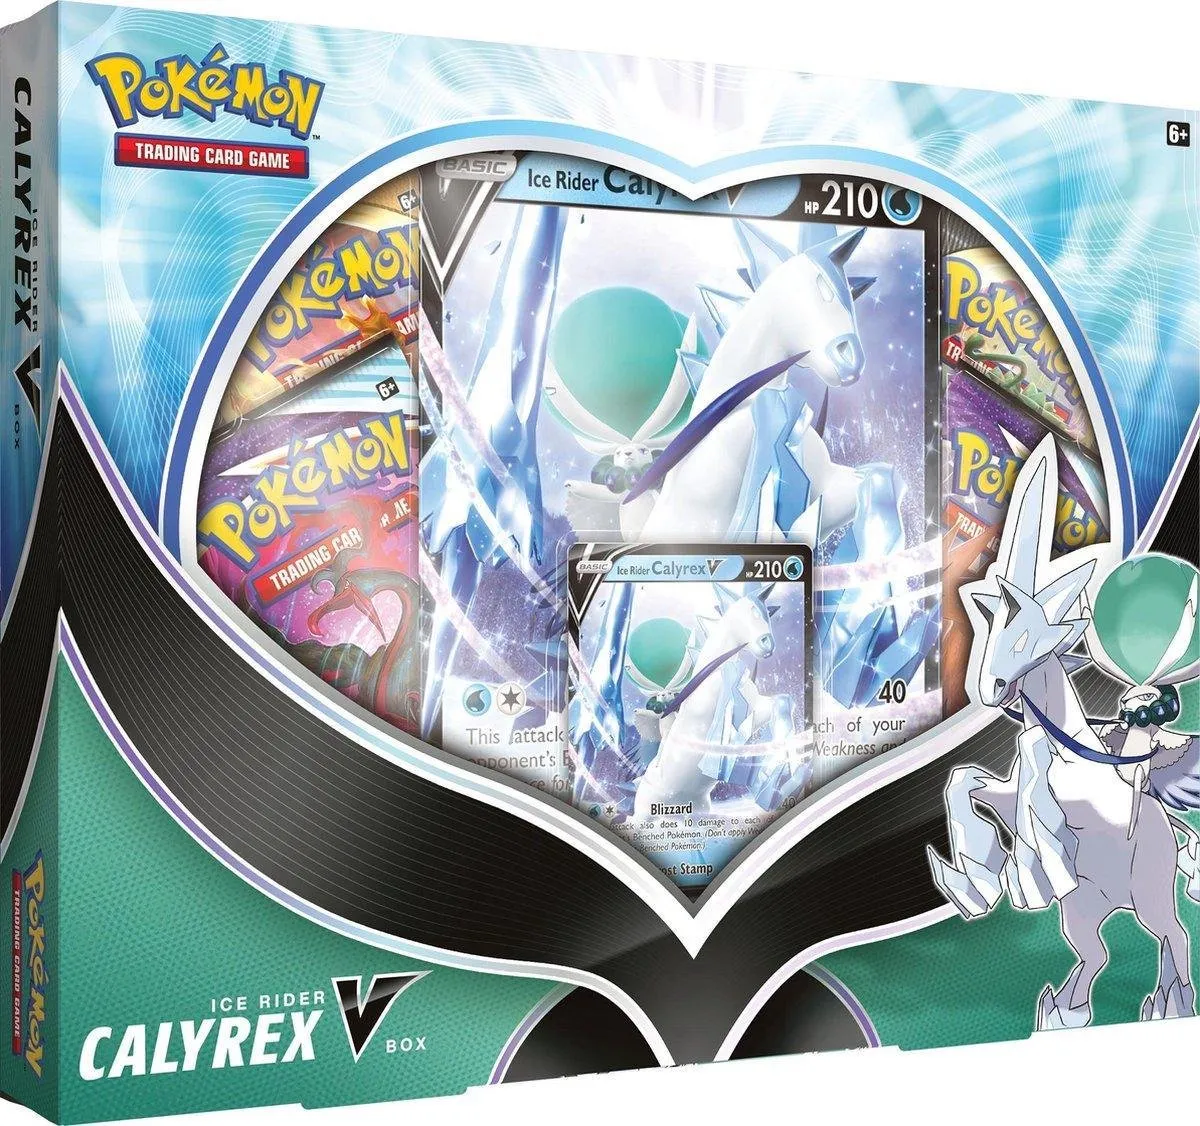 Pokémon Calyrex V Box - Ice Rider - Pokémon Kaarten speelgoed